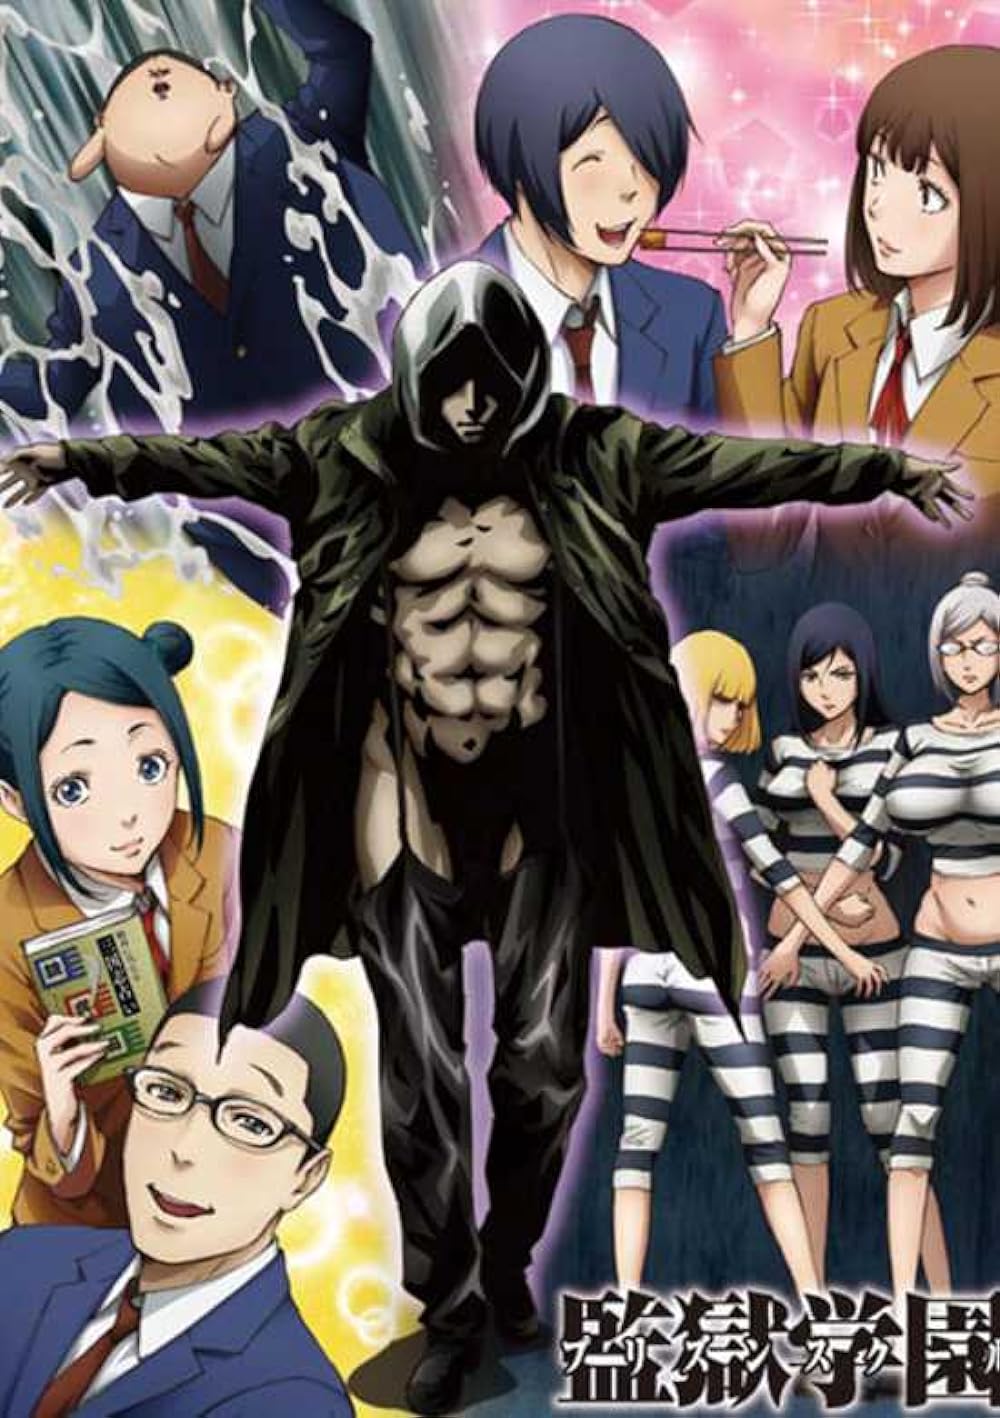 craig fitzgerald recommends Prison School Manga Uncensored